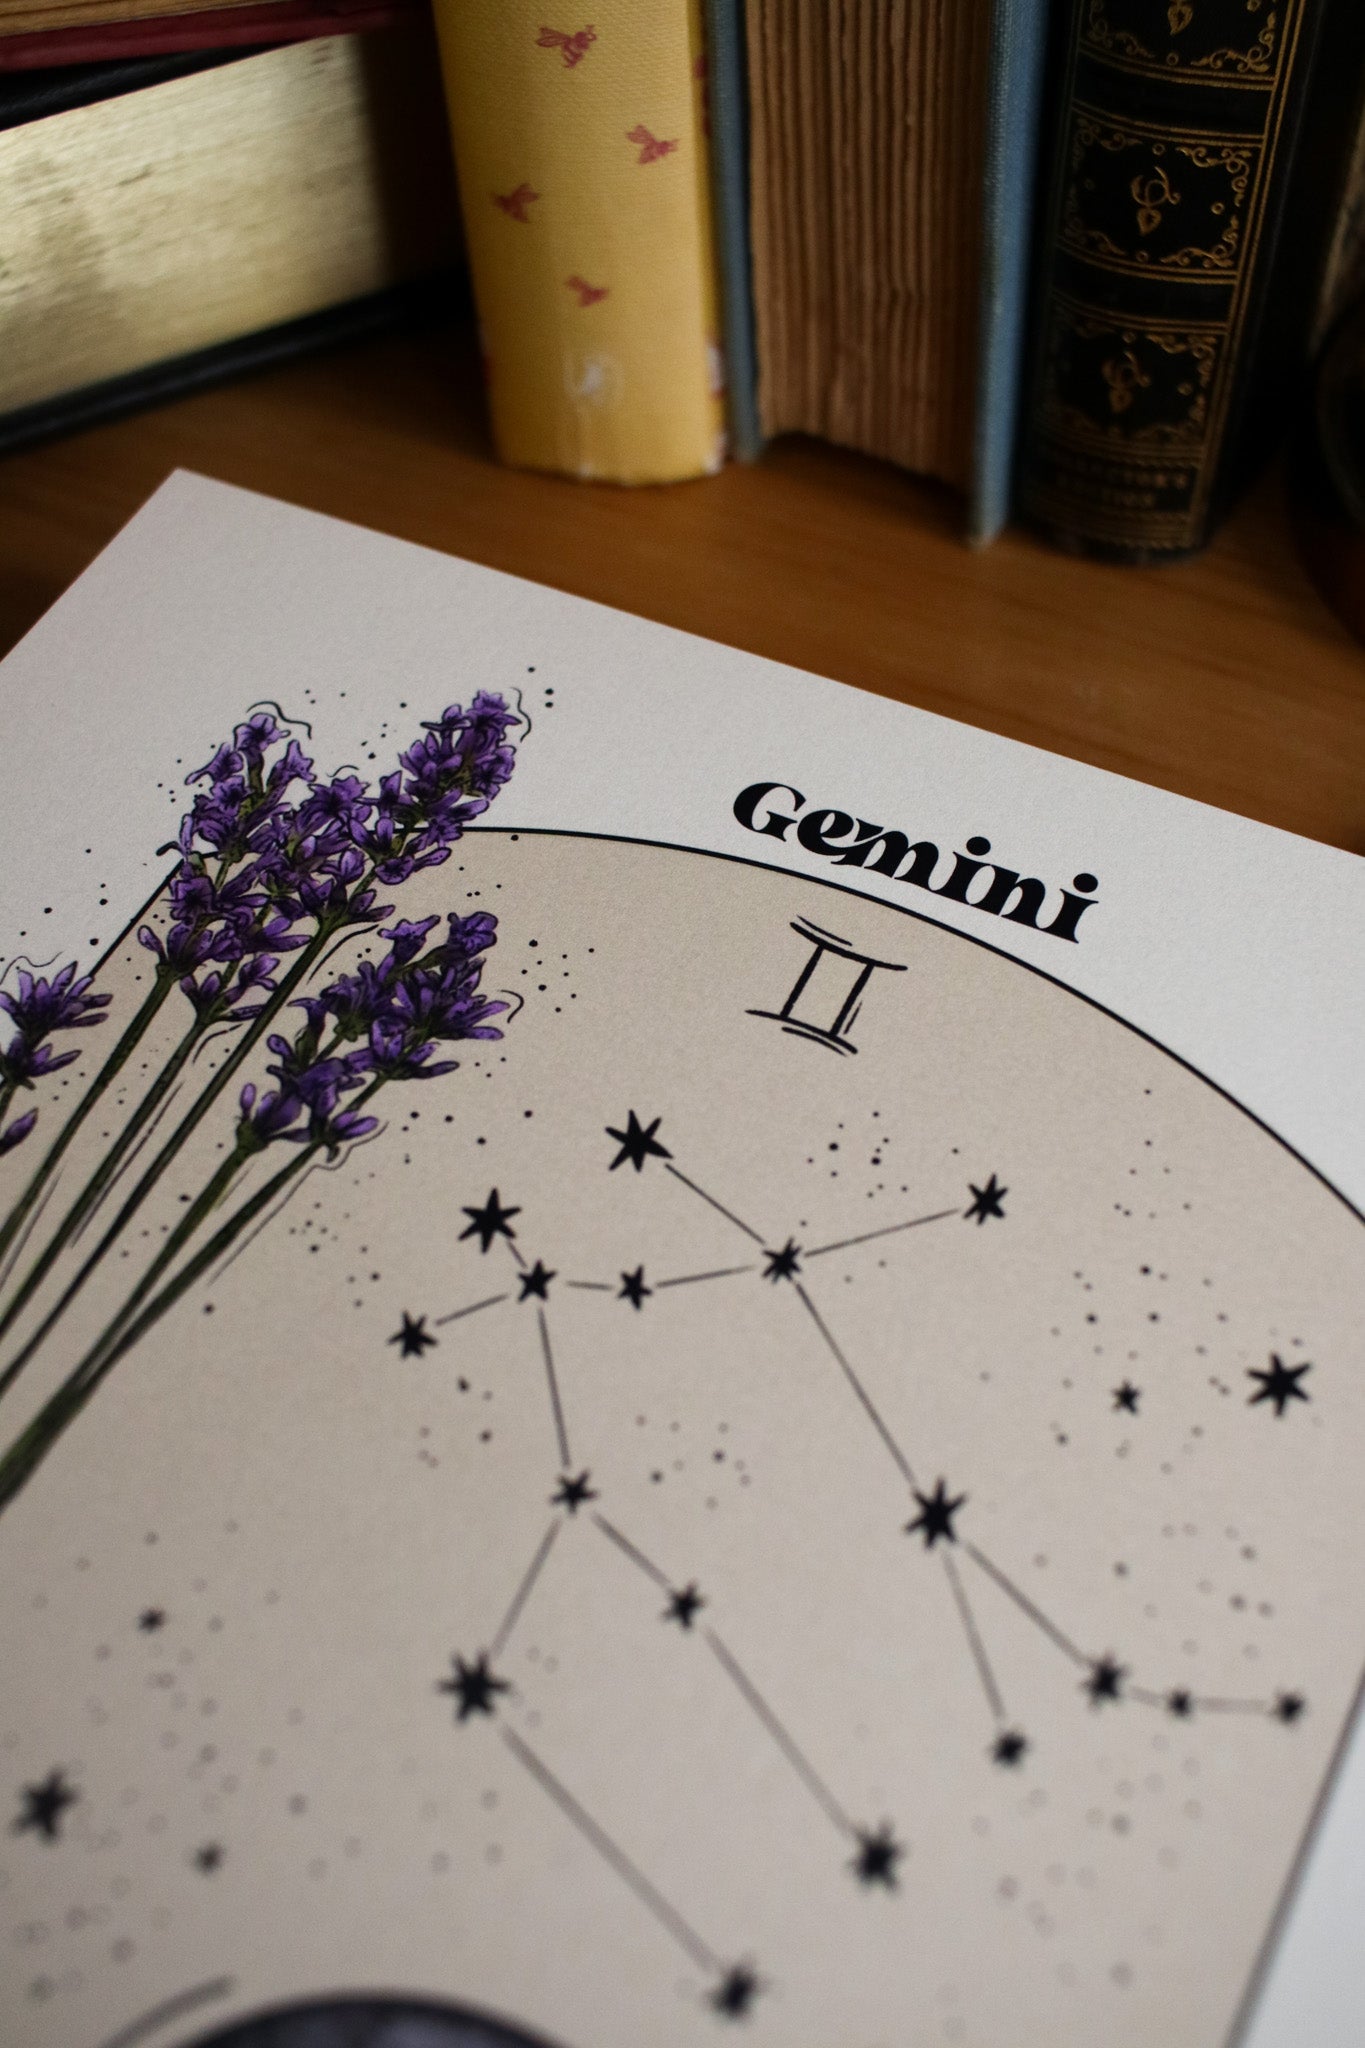 Gemini - Astrology Infographic